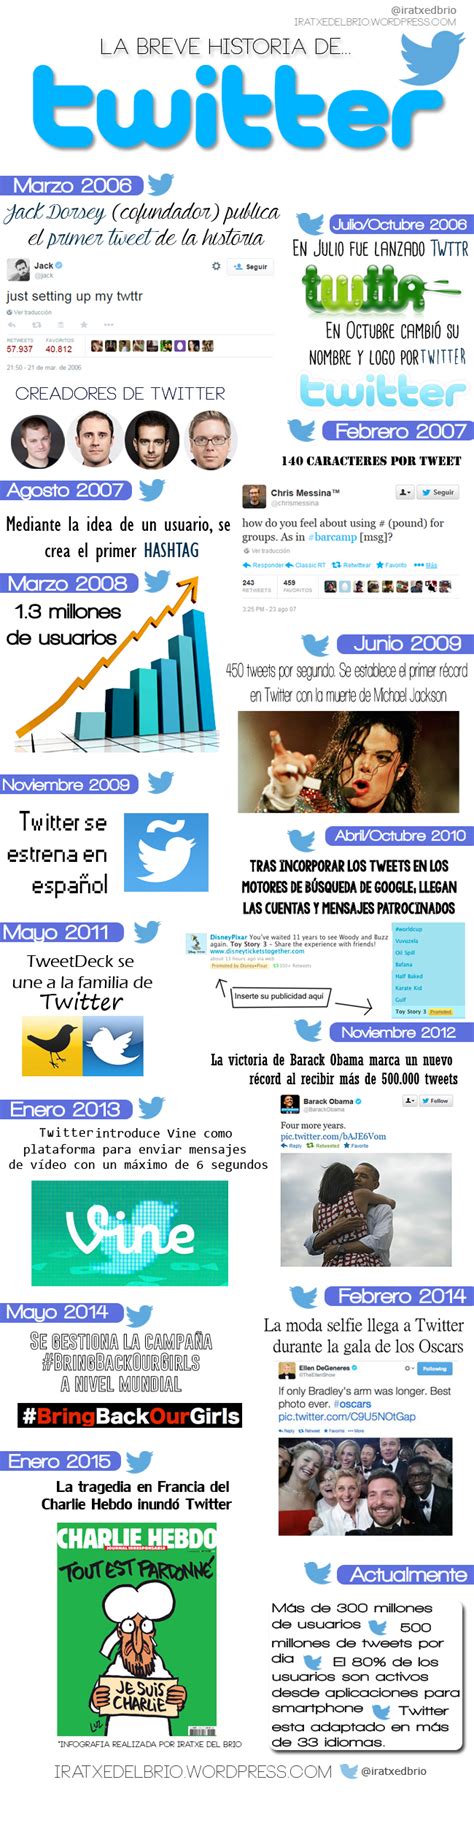 La breve Historia de Twitter #infografia #infographic # ...